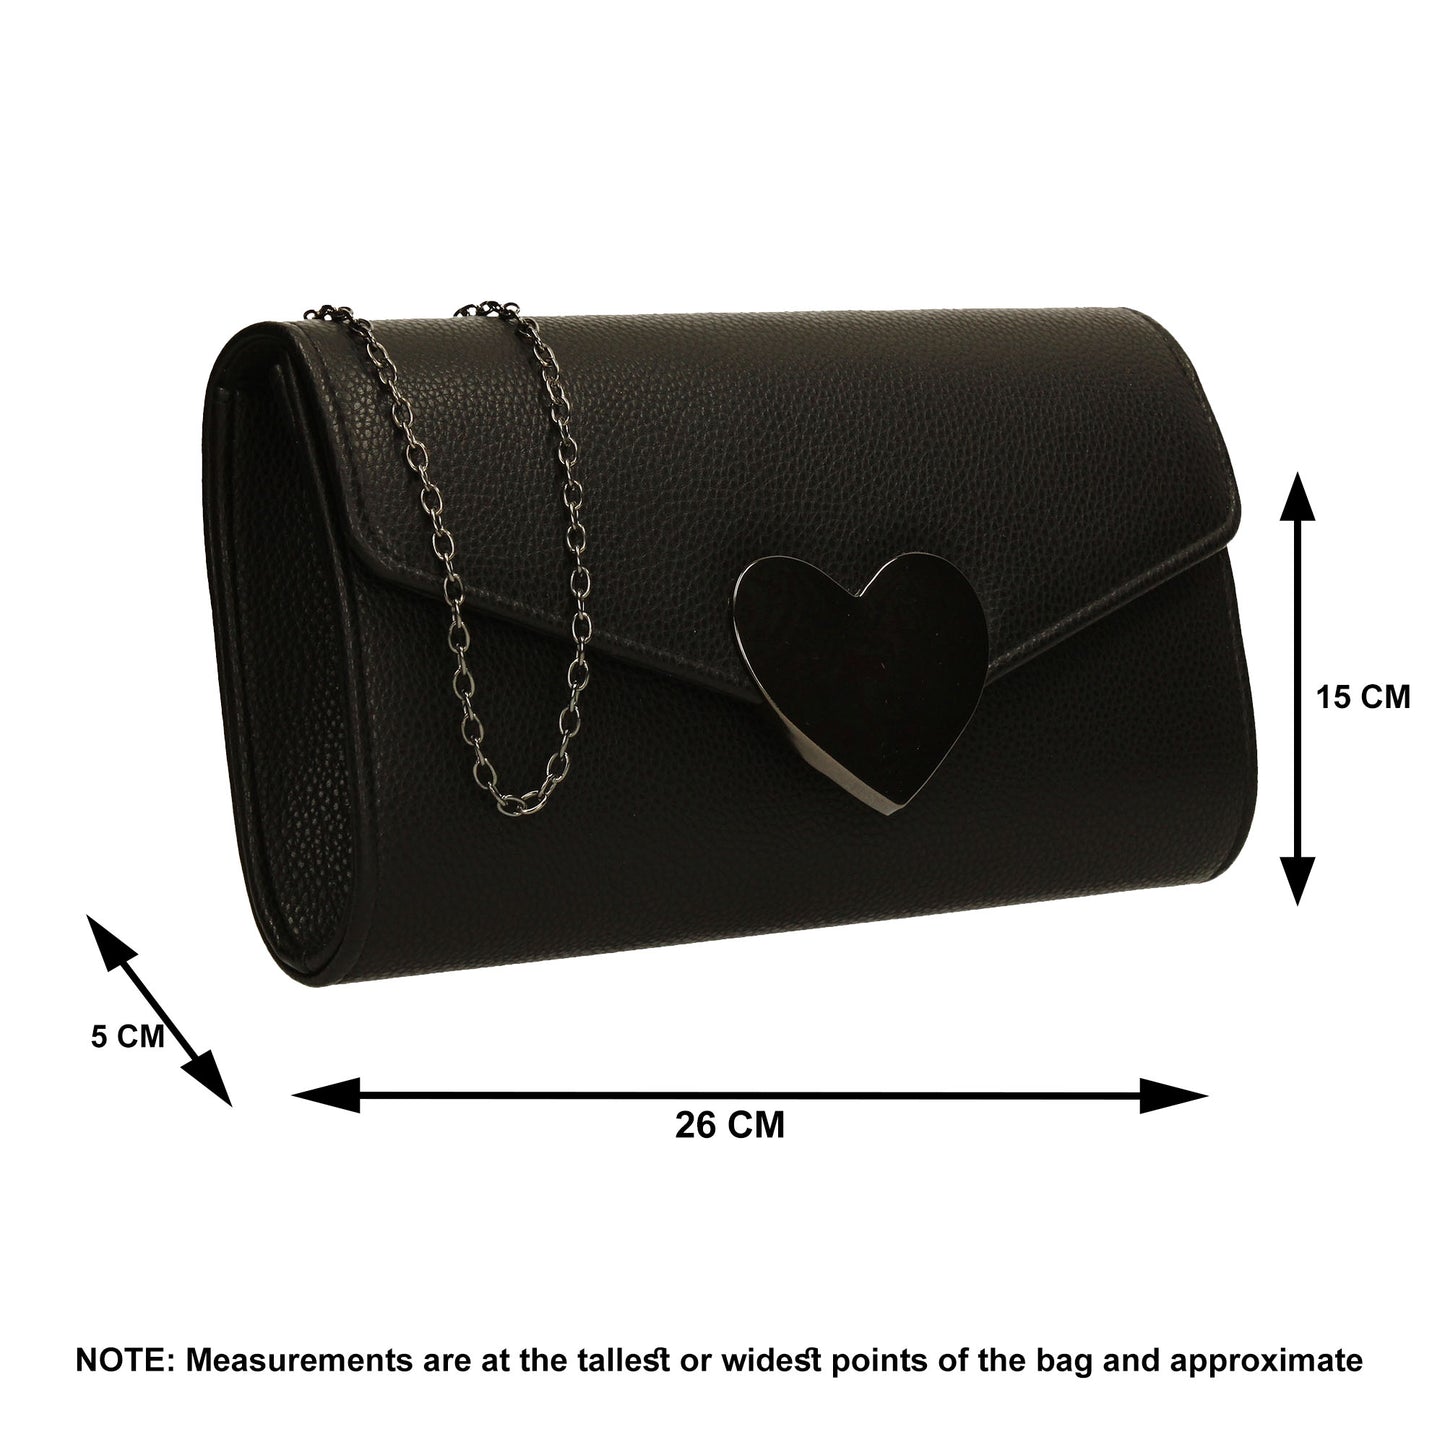 SWANKYSWANS Corrie Heart Clutch Bag Black Cute Cheap Clutch Bag For Weddings School and Work